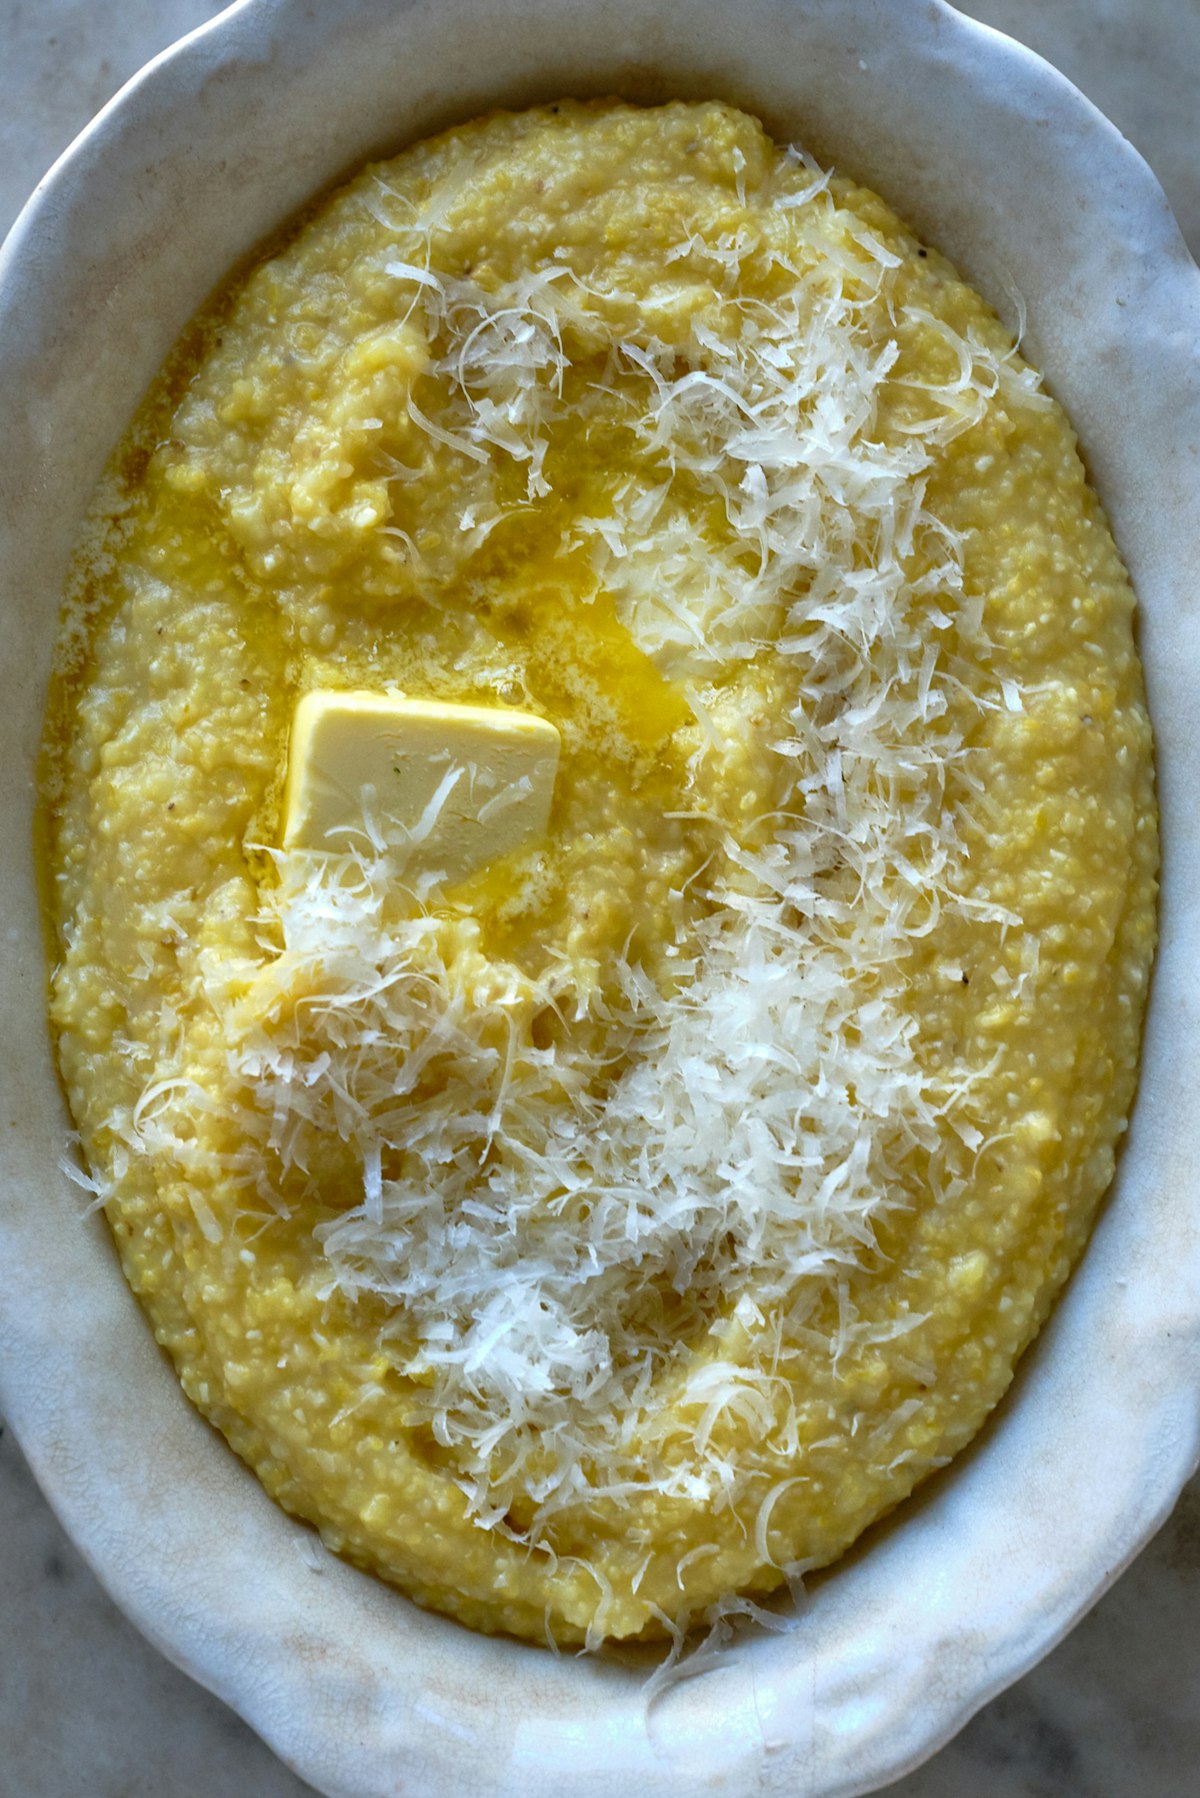 Creamy Polenta (Italian Cornmeal) - Inside The Rustic Kitchen